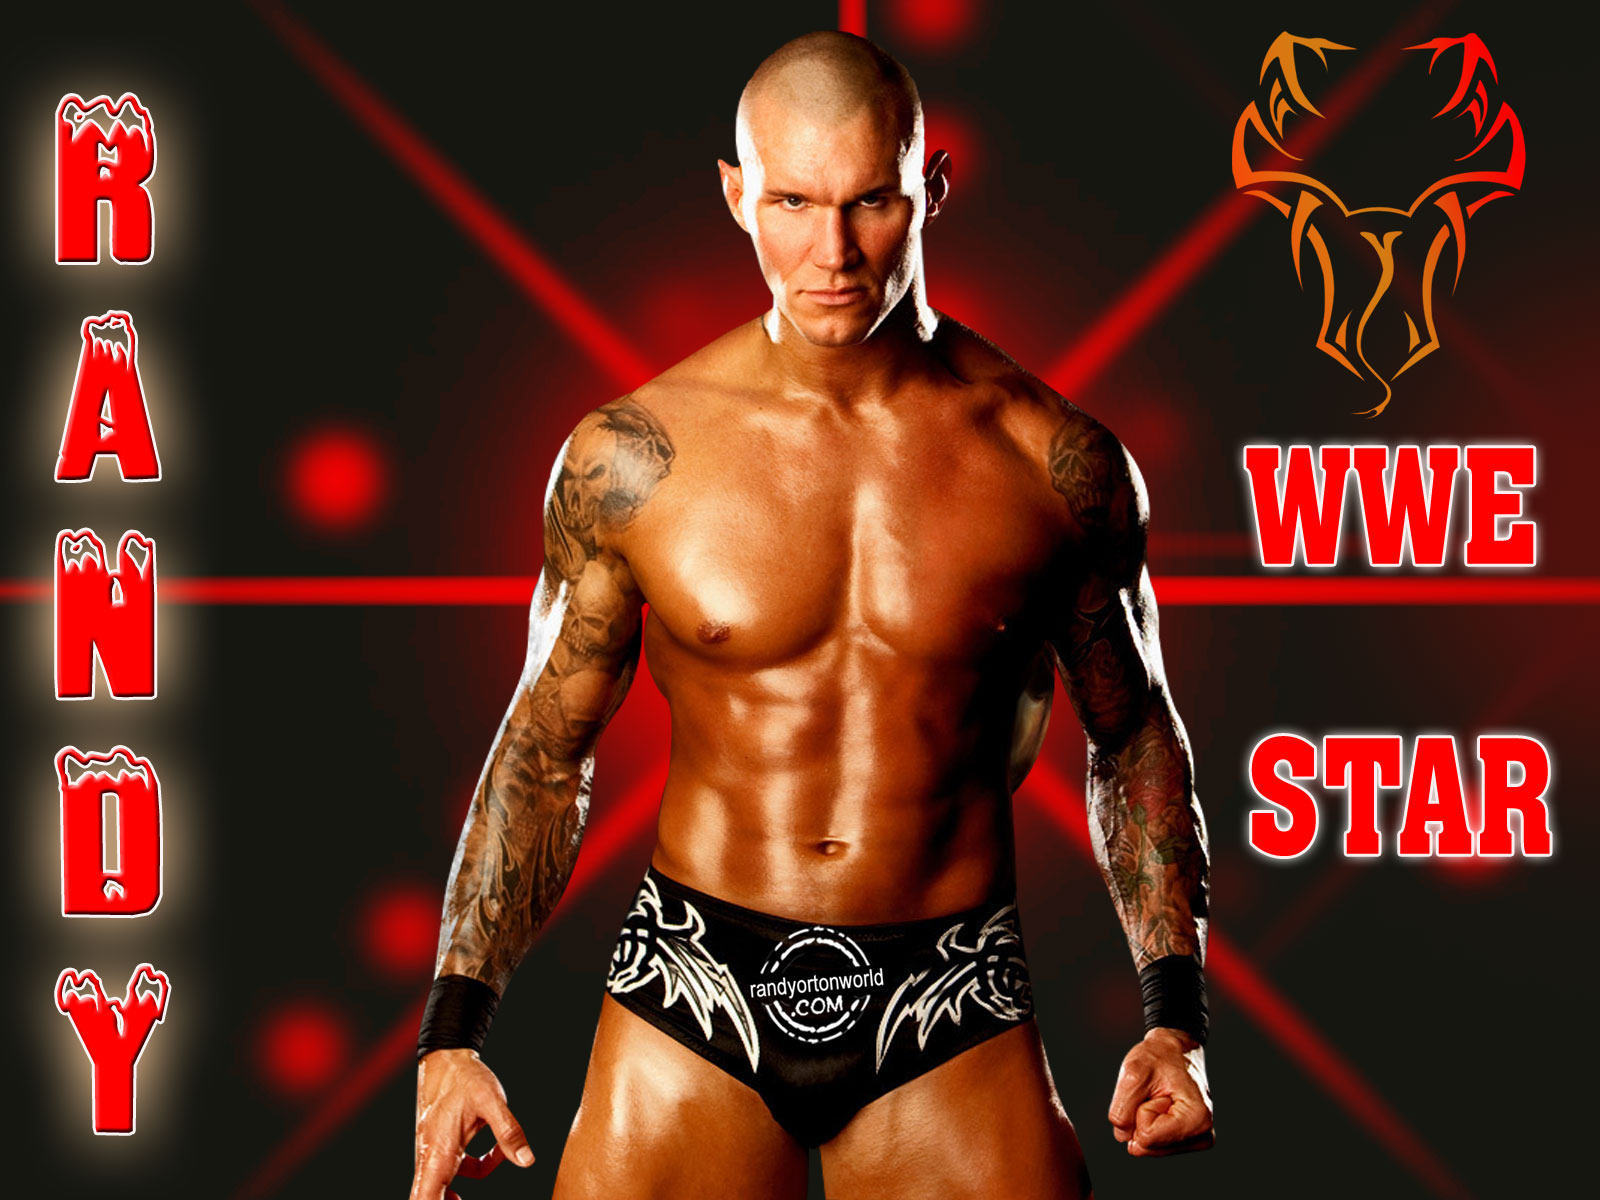 The Wwe Superstar Randy Orton Wallpaper